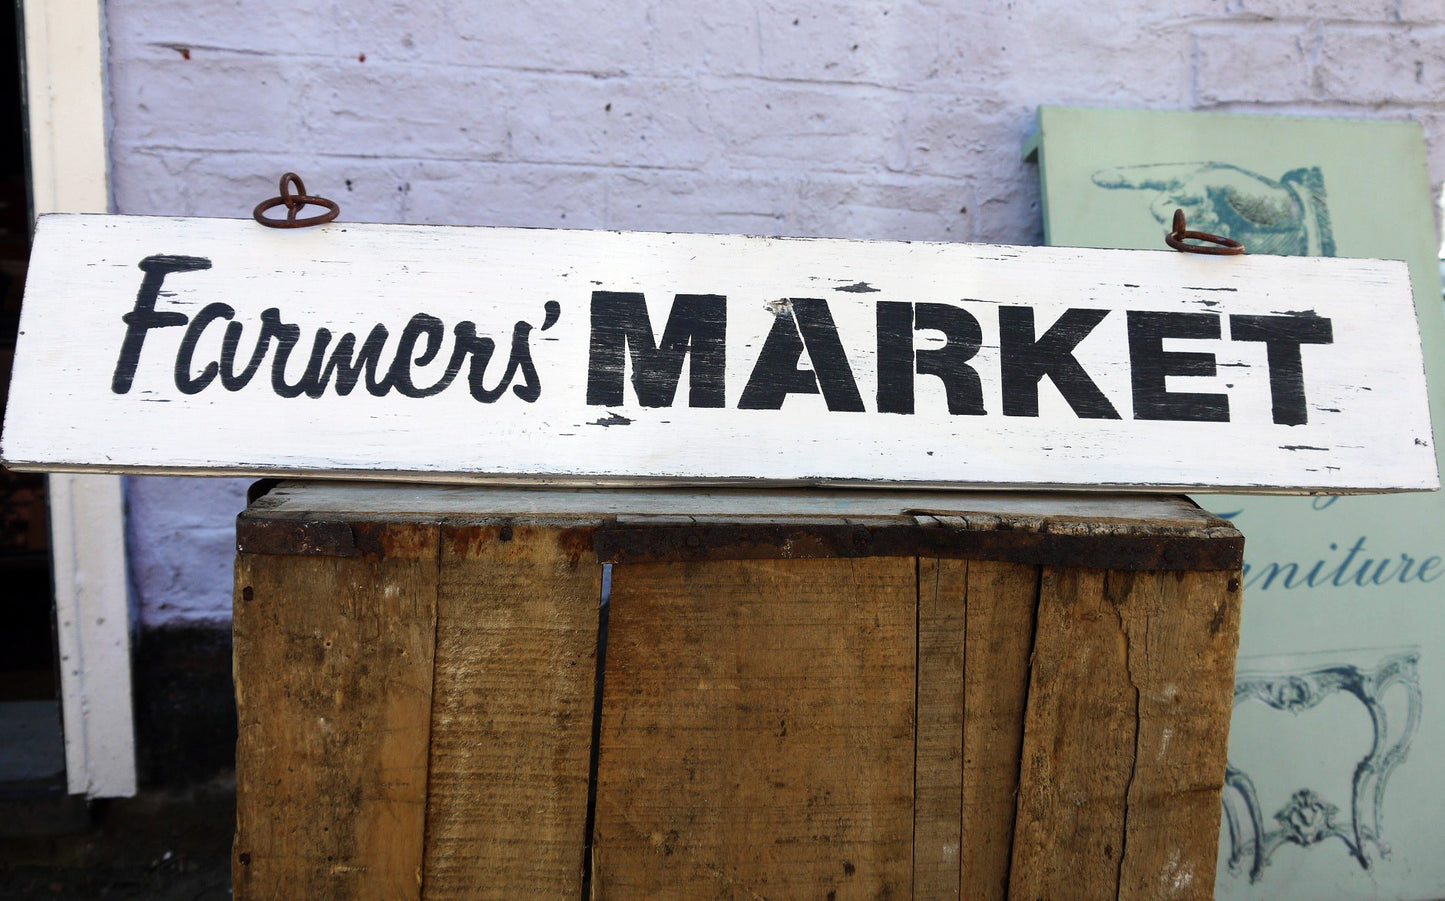 Vintage style Farmers Market, Vintage market, Super Market, Flower Market, Flea Market Sign